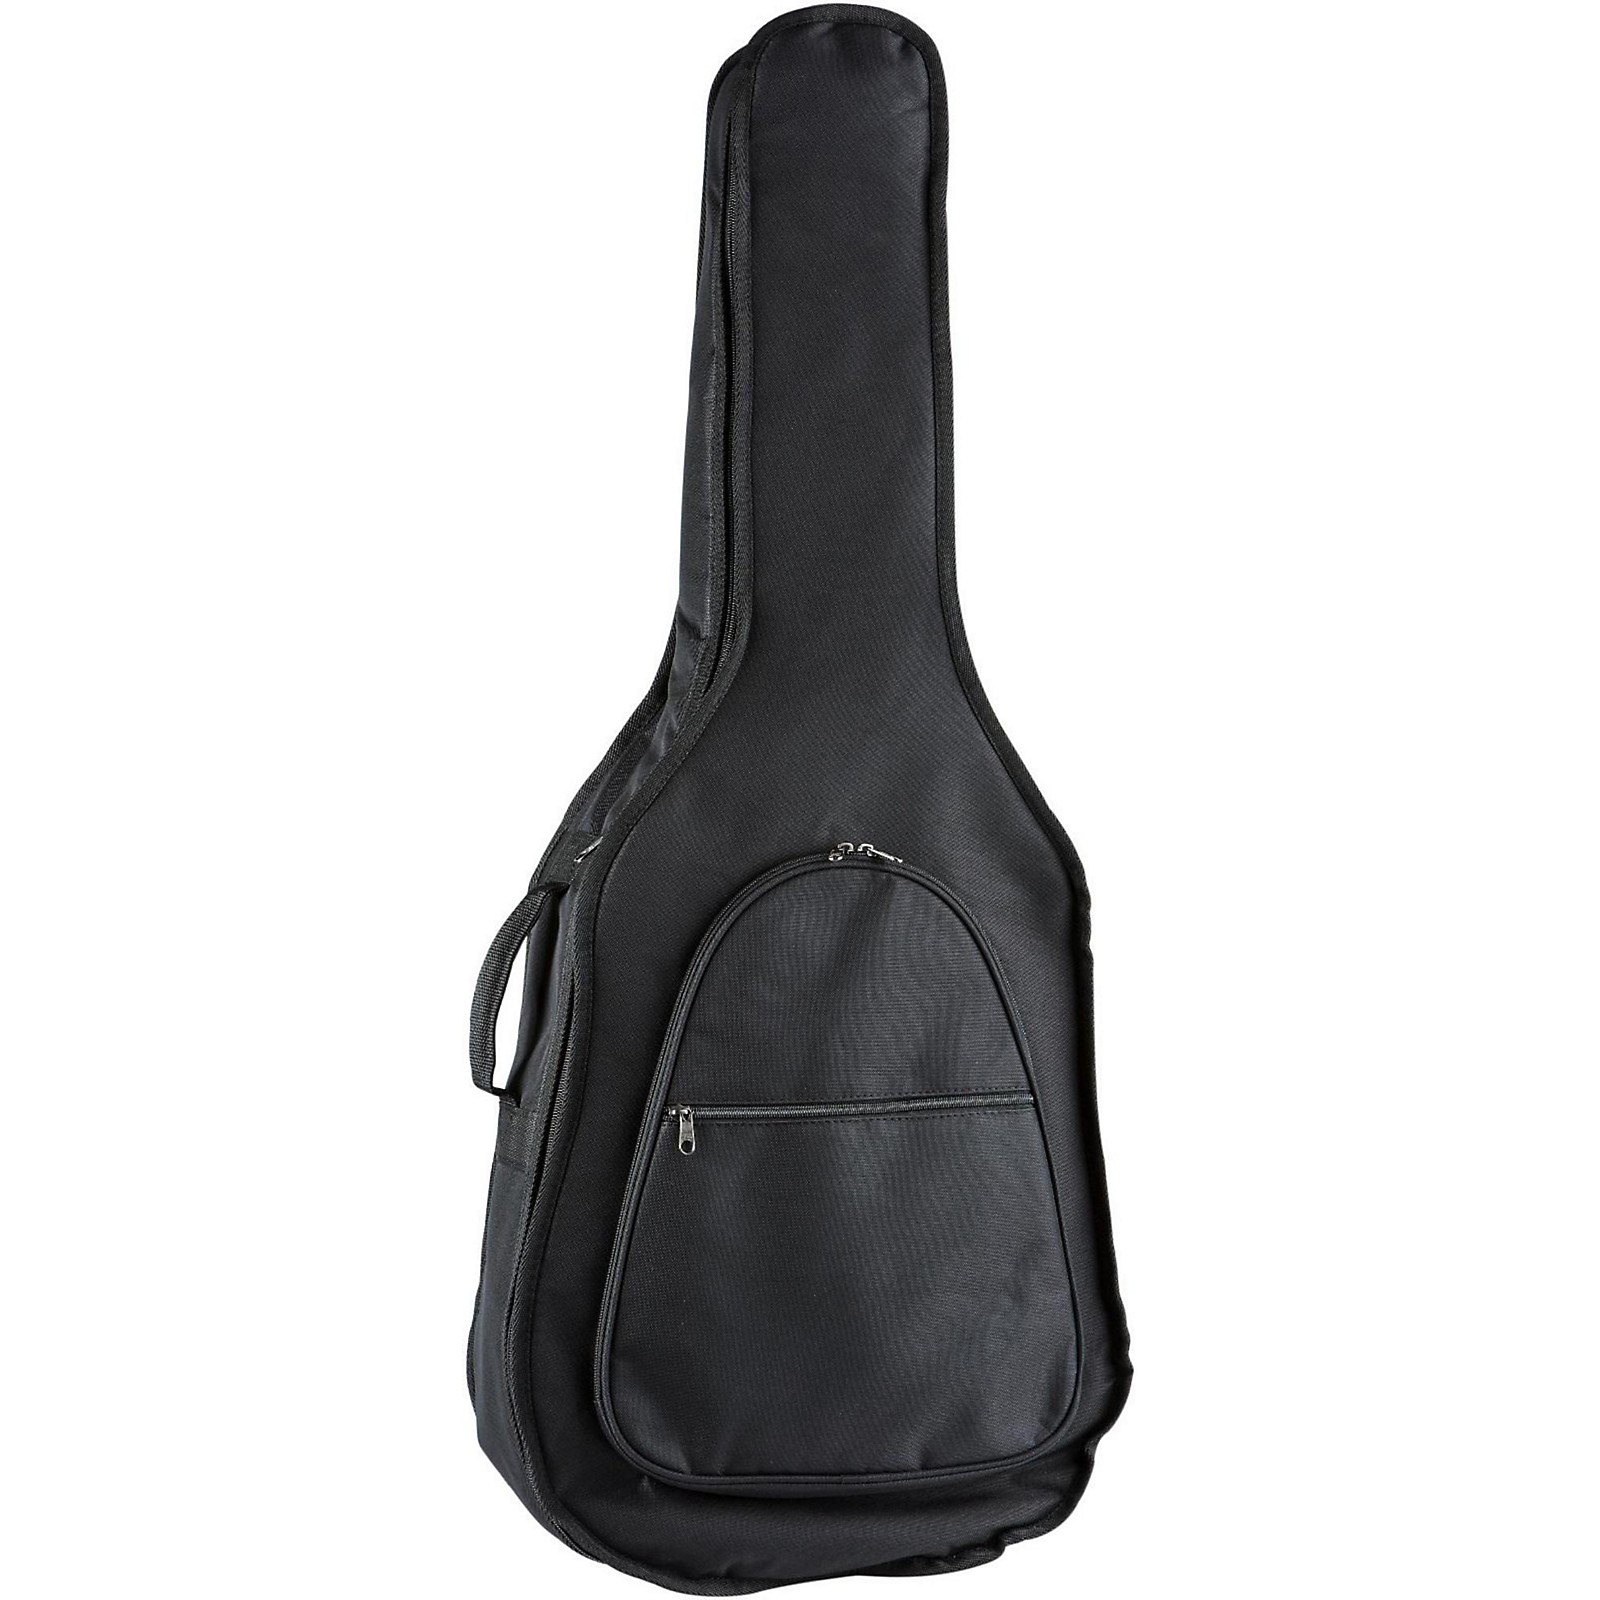 Musician's Size Acoustic Guitar Bag | Guitar Center